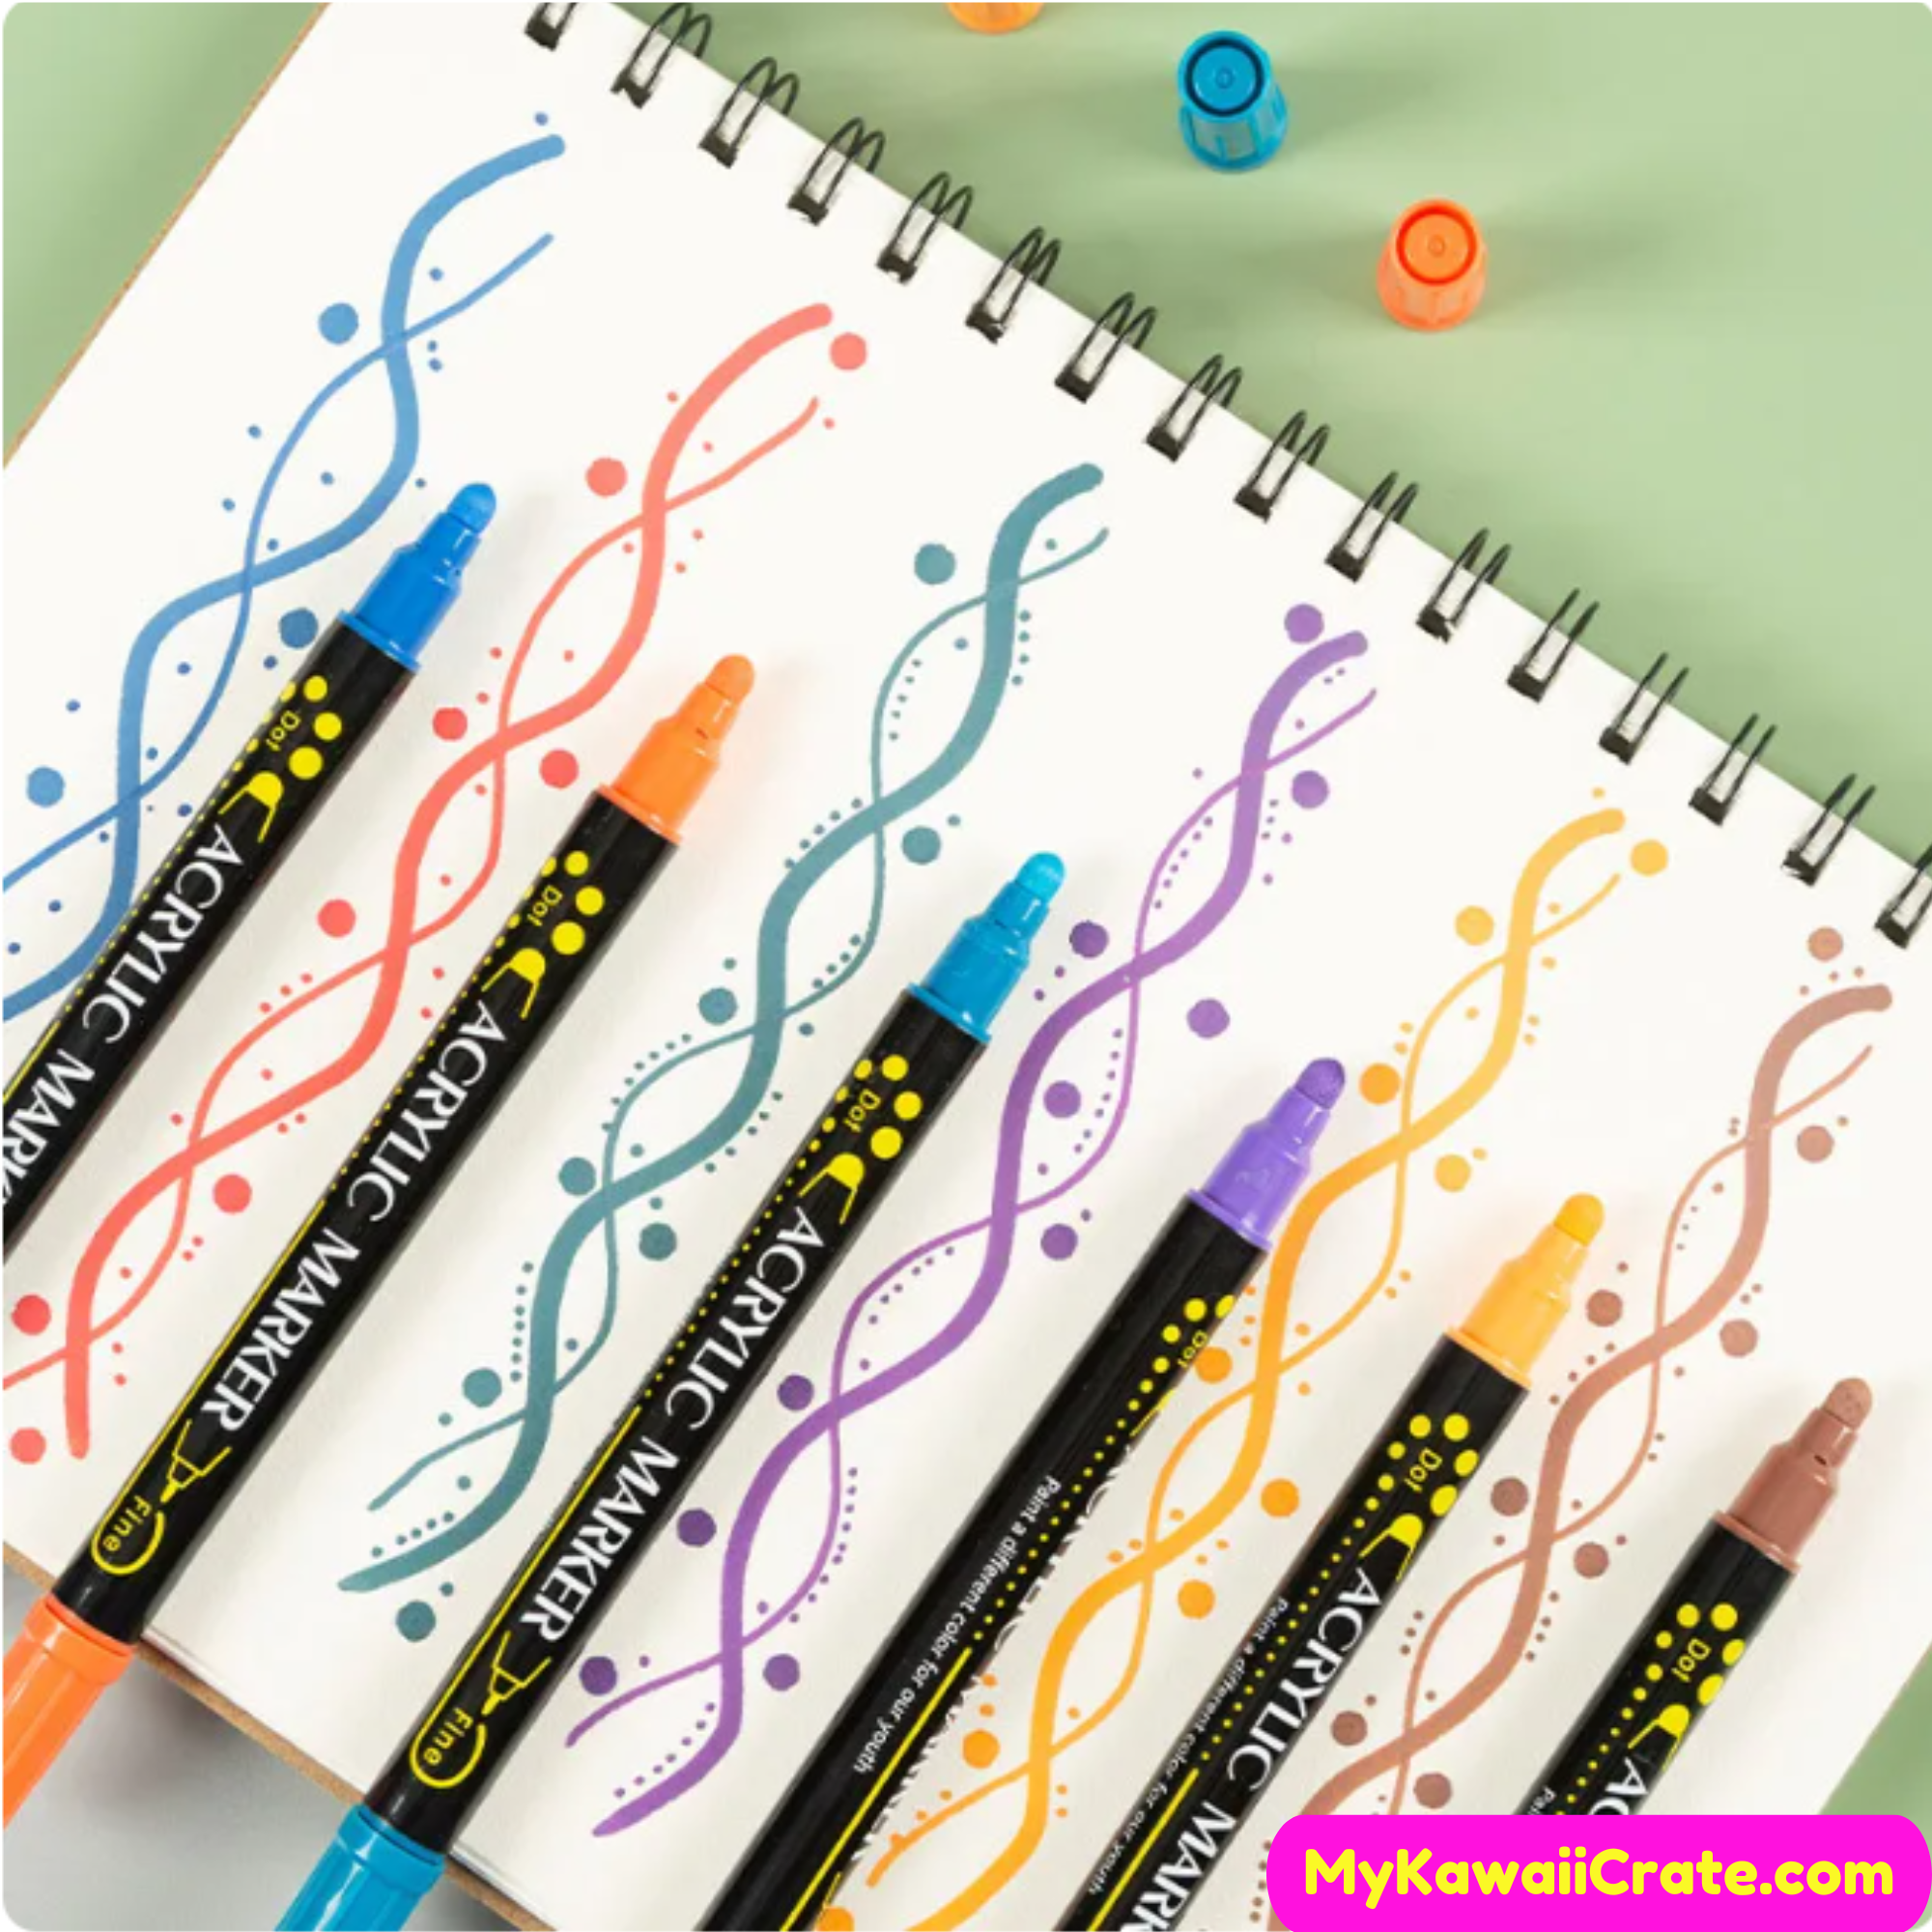 Dual Tip Premium Acrylic Paint Pens Markers 12/24/36 Colors Set Paint Pens  for Rock Painting, Ceramic, Glass, Wood, Canvas, DIY Crafts 